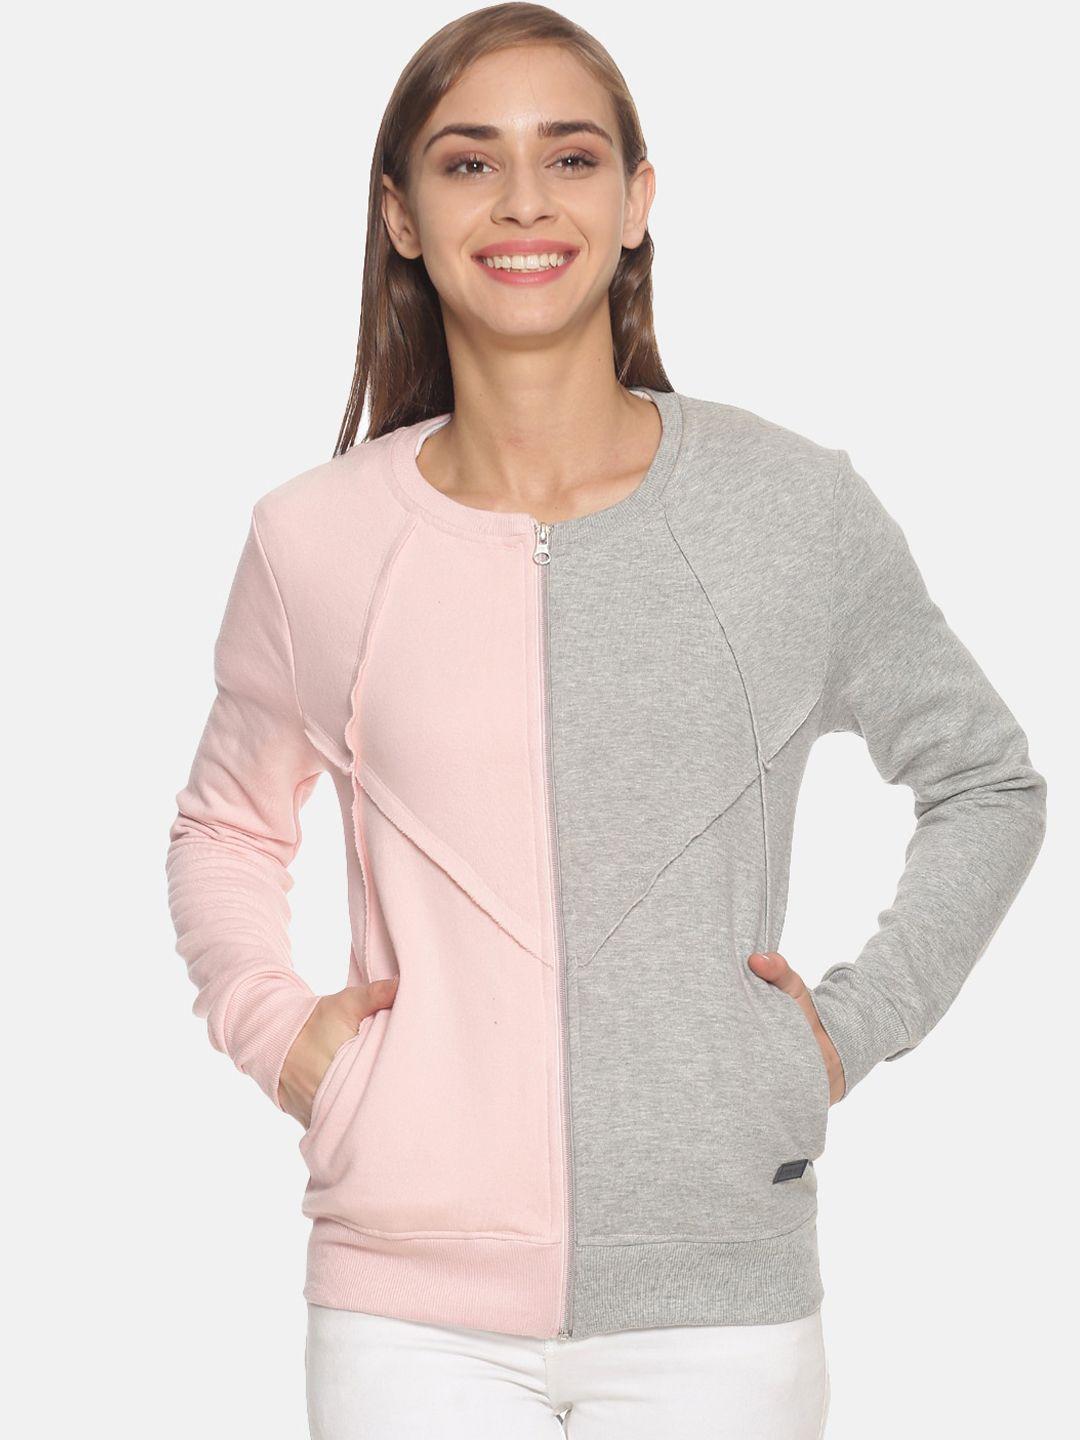 campus-sutra-women-pink-colourblocked-pure-cotton-sweatshirt